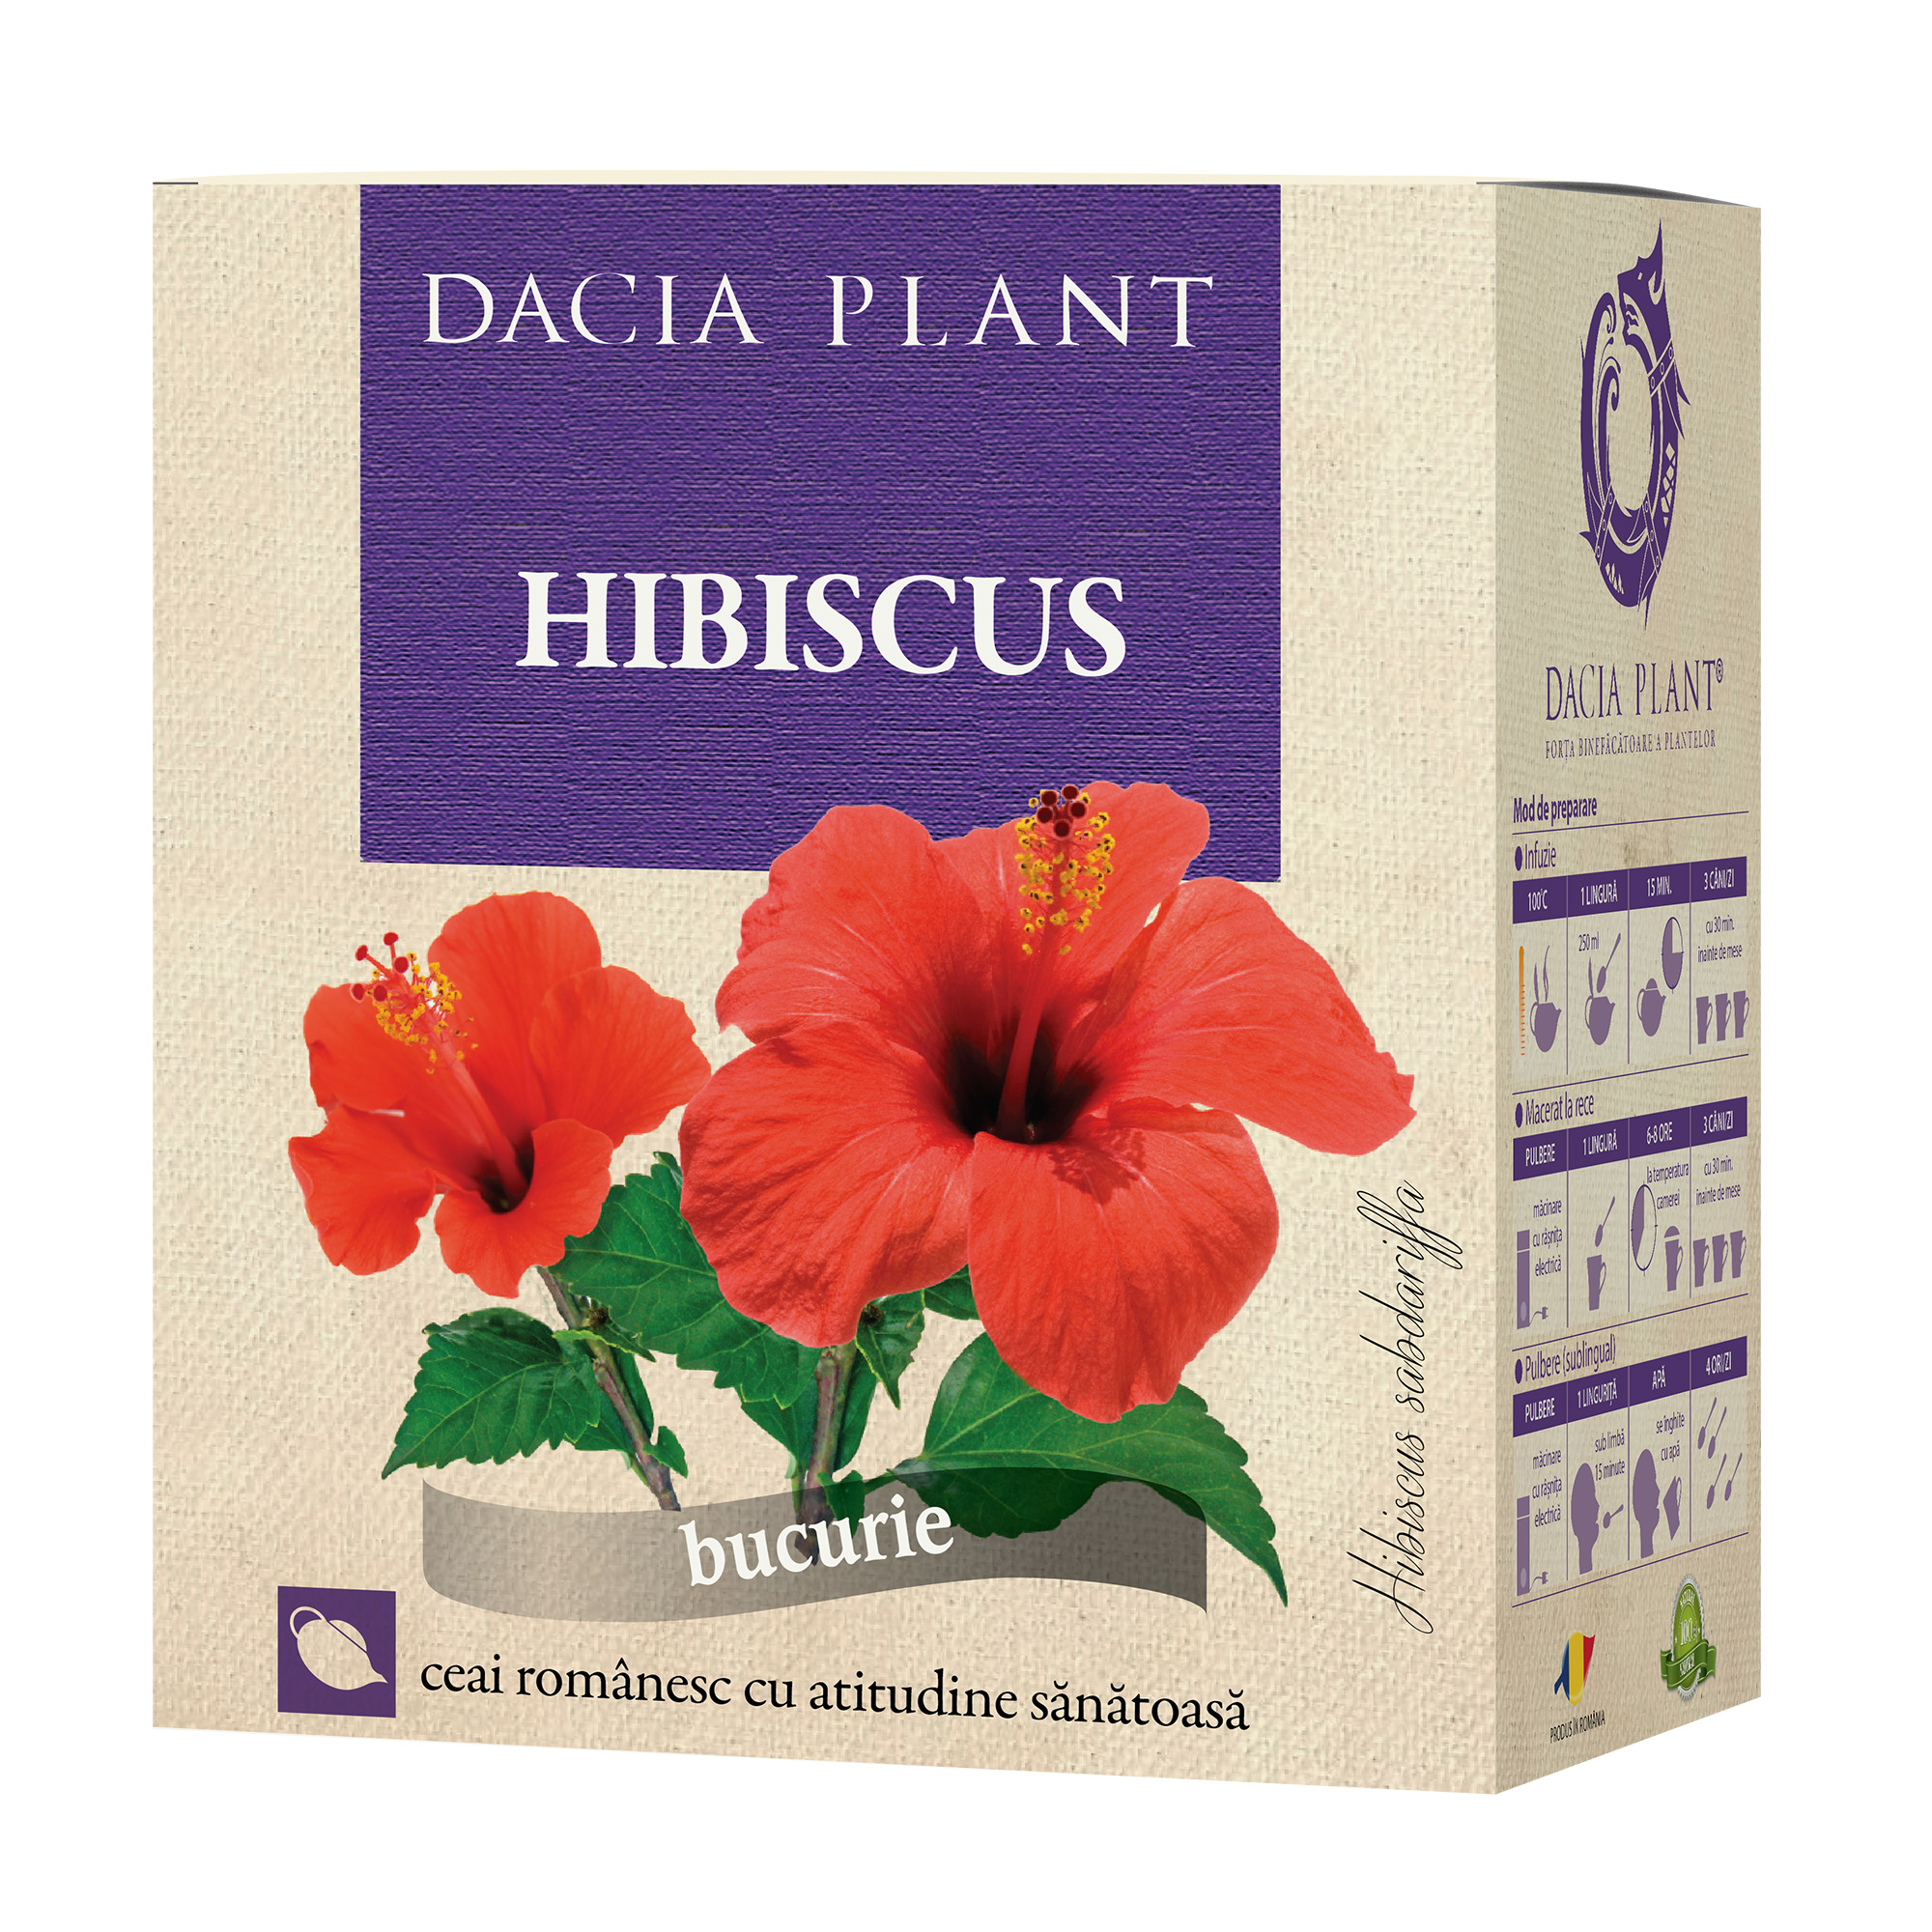 Ceai de Hibiscus Dacia Plant